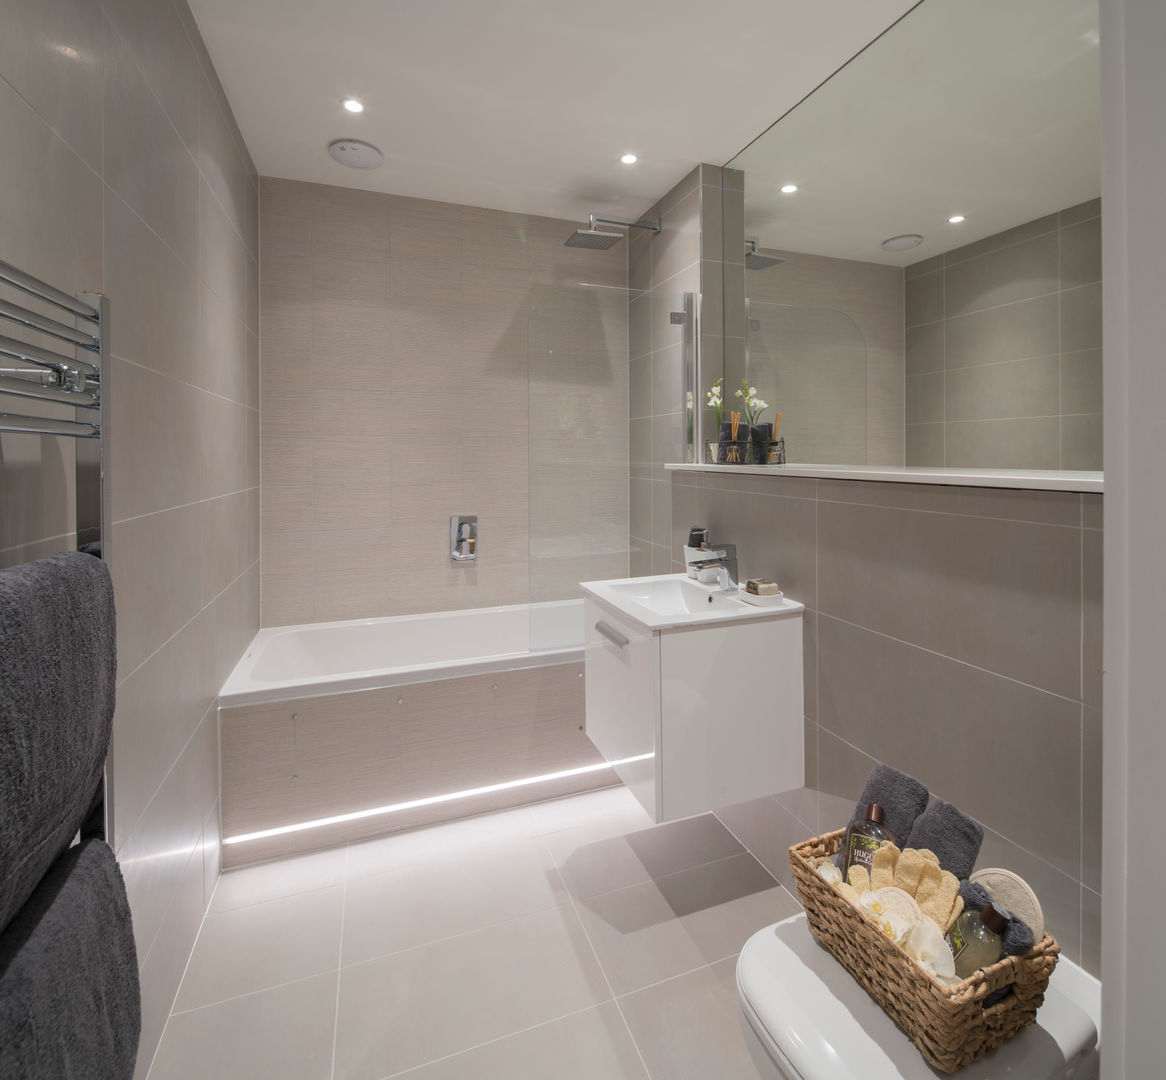 Station Rd, New Barnet Jigsaw Interior Architecture & Design Casas de banho modernas luxury,bathroom,tiles,mirror,bronze,london,show home